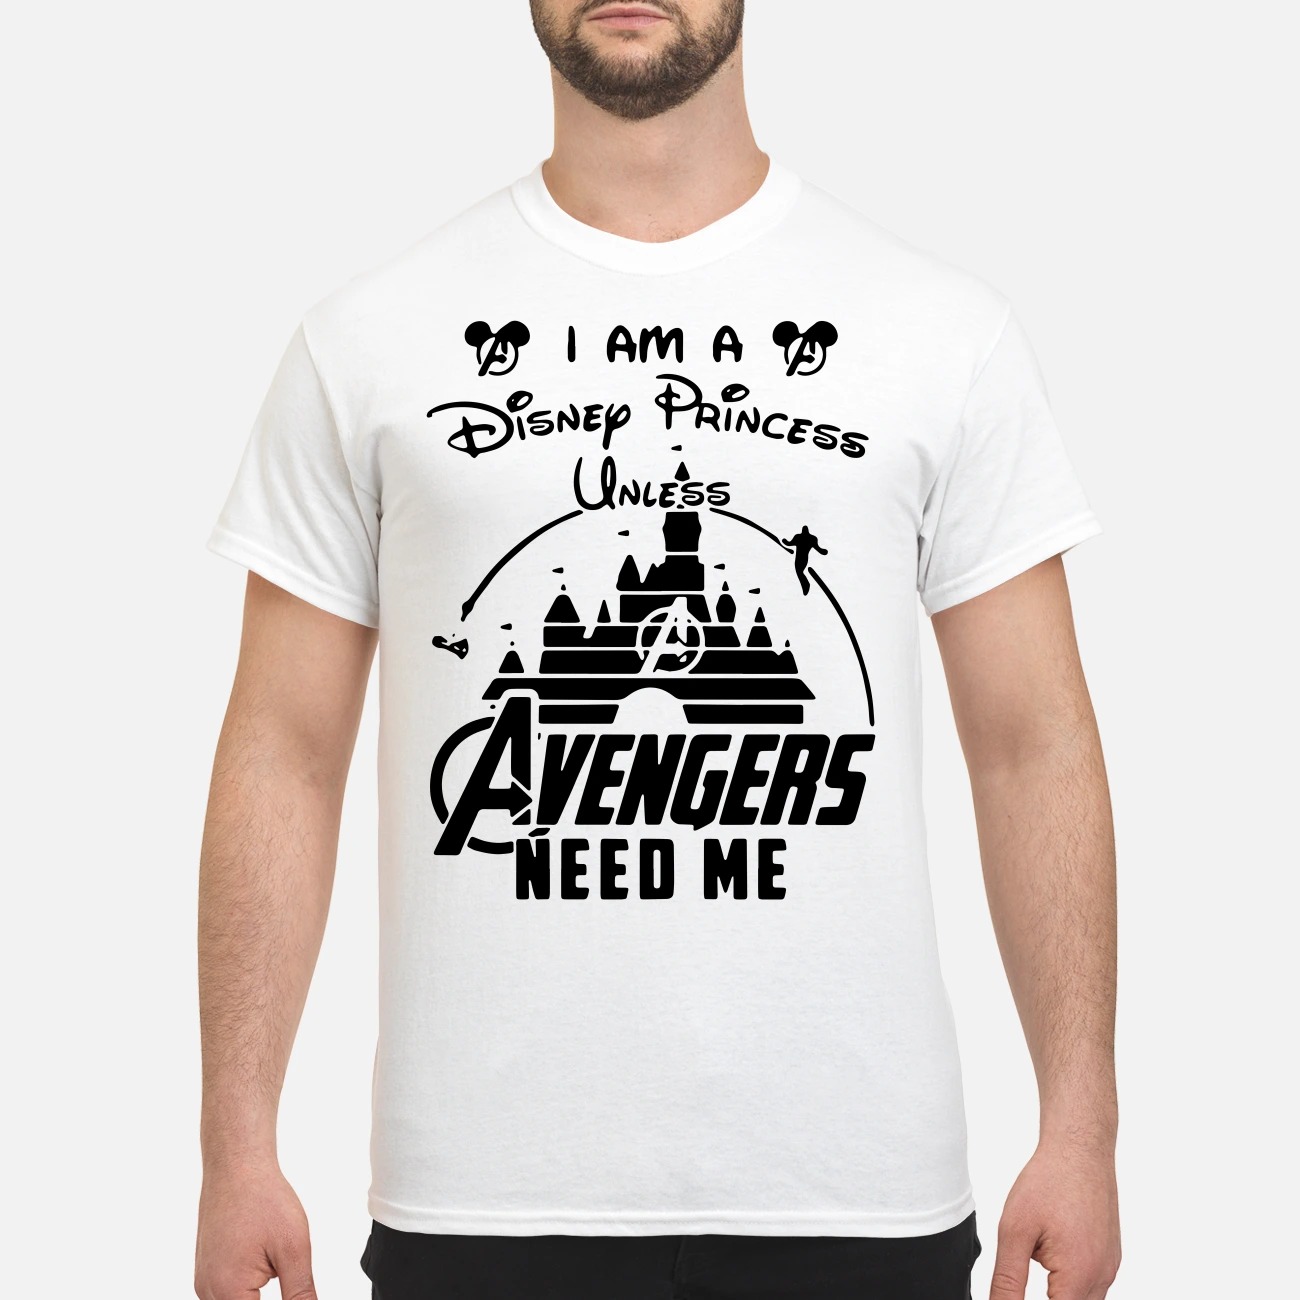 I am a Disney Princess unless Avengers need me shirt